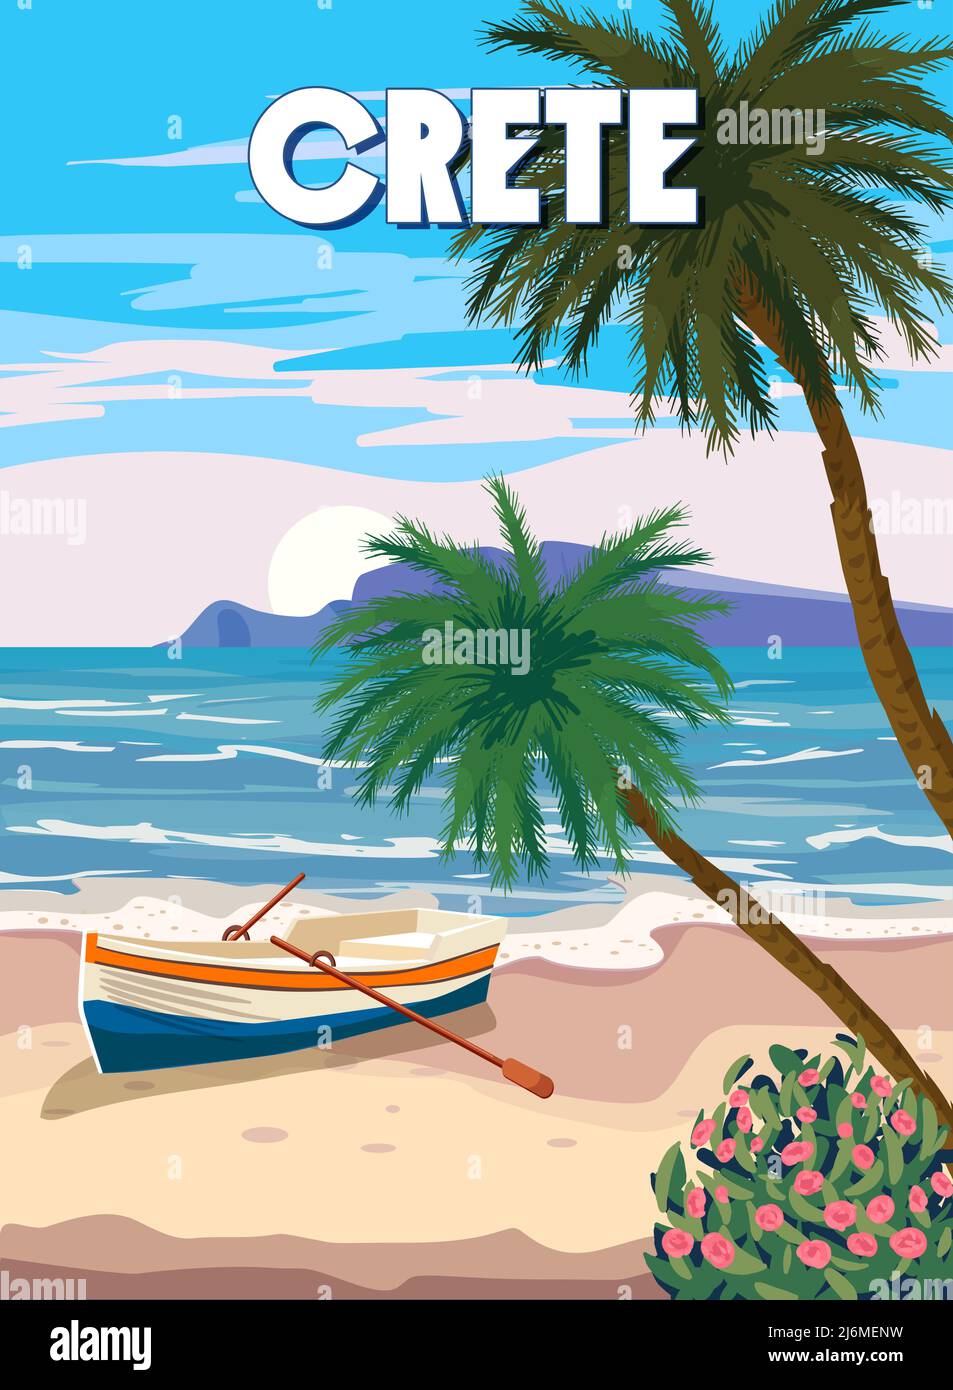 Crete Poster Travel, Greek seascape, beach, palms, boat, poster, Mediterranean landscape. Vintage style Stock Vector